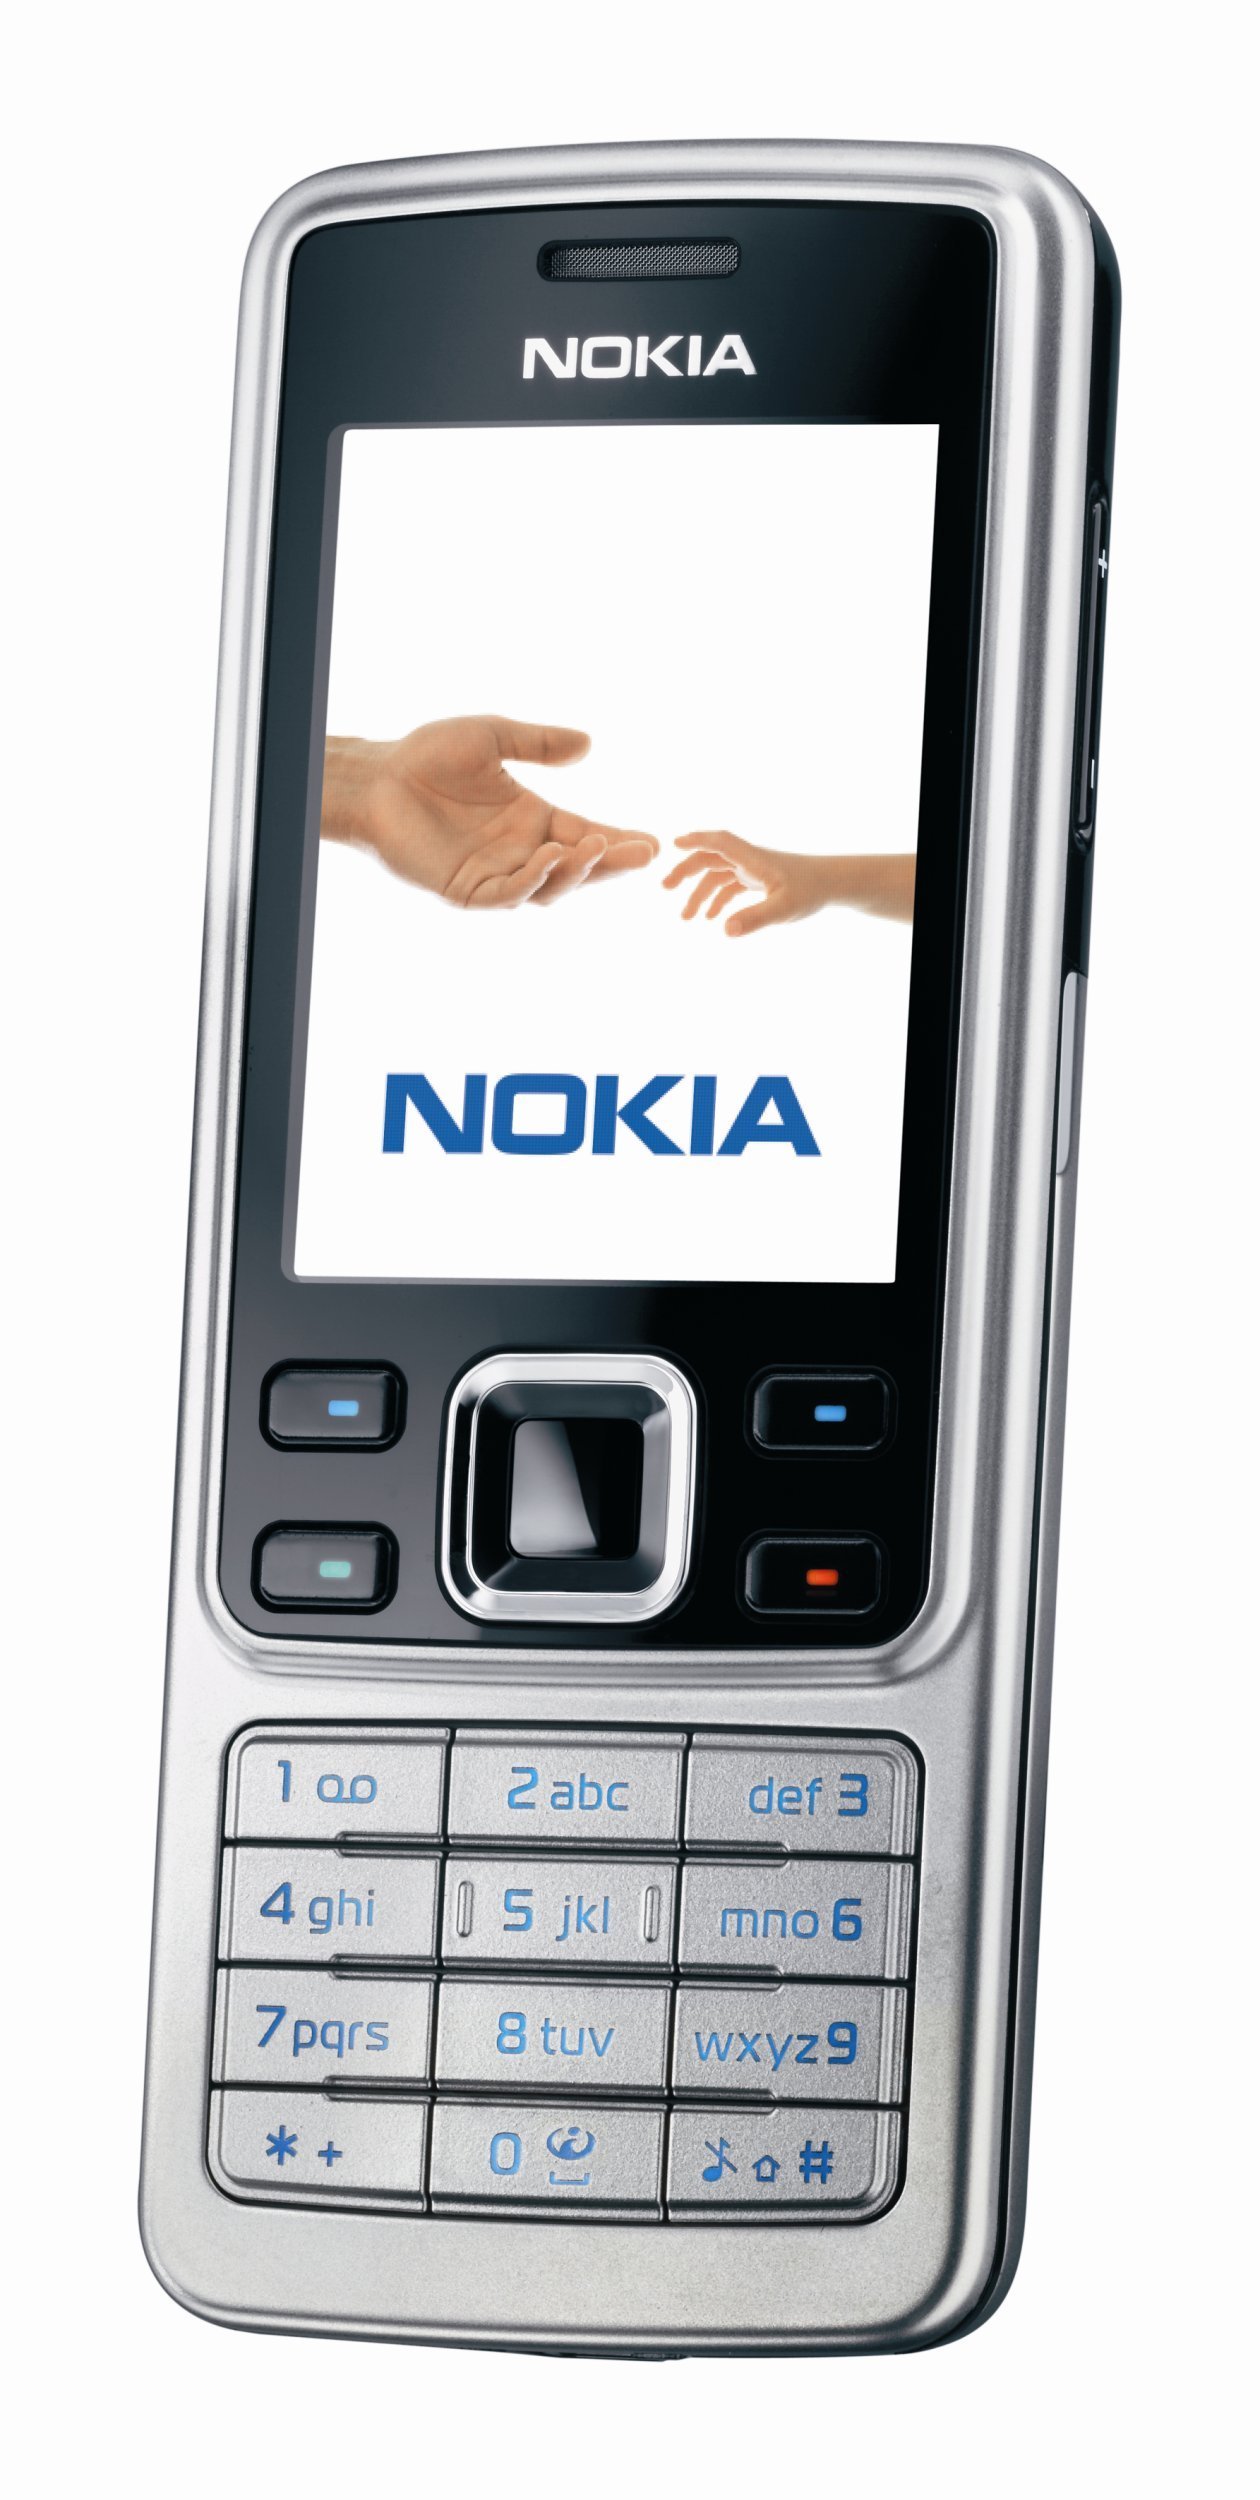 Nokia 6300 Unlocked Triband Camera Business Phone